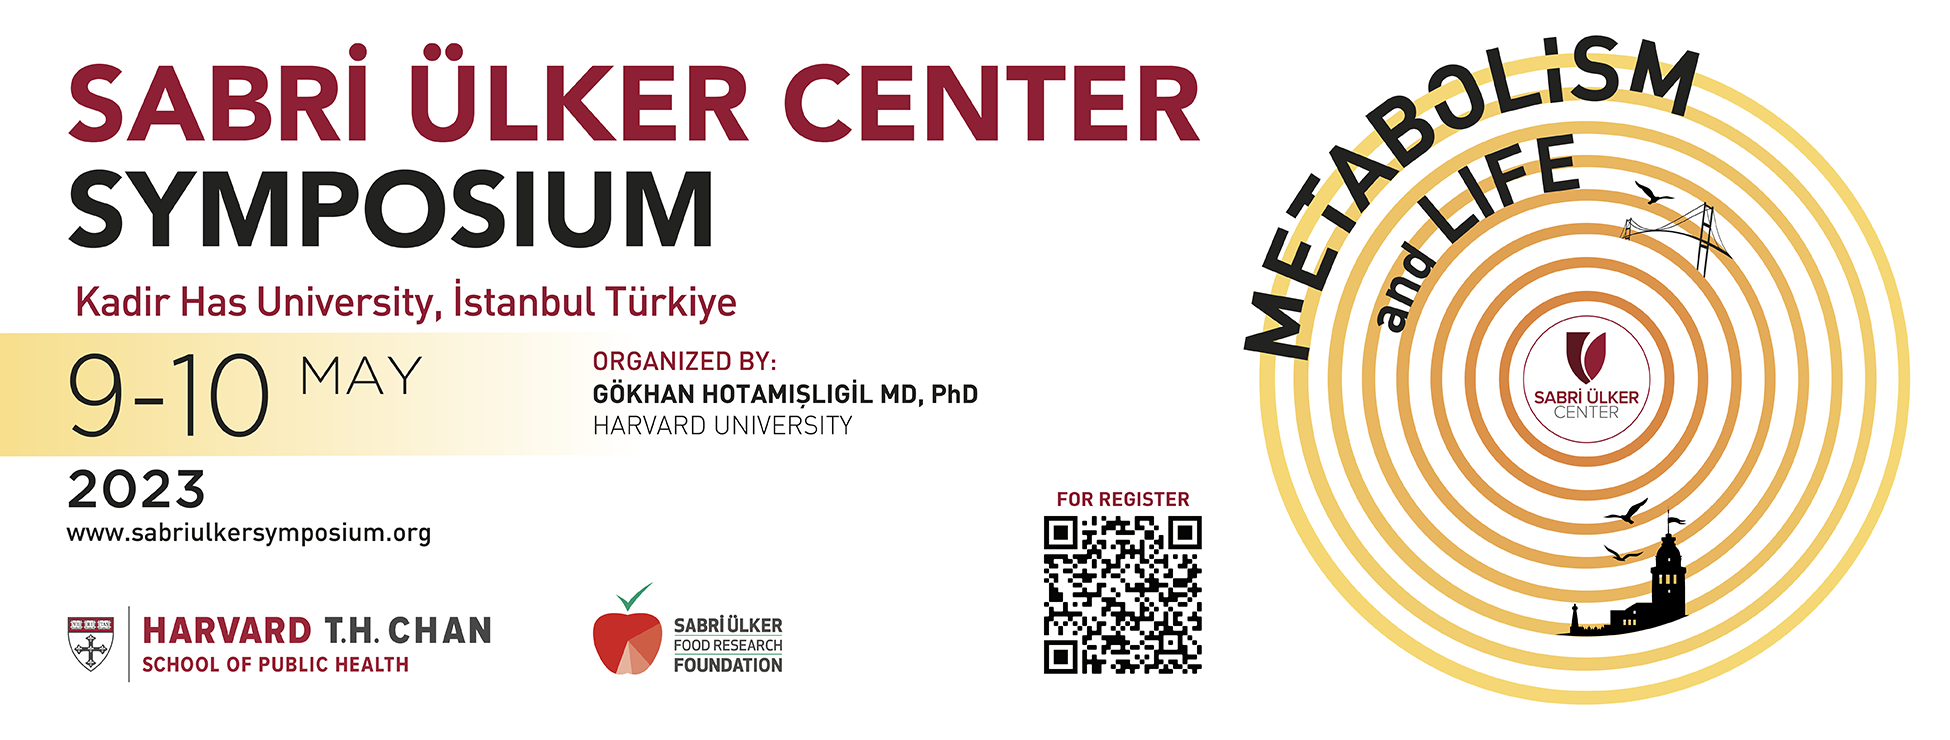 Sabri Ulker Center Symposium